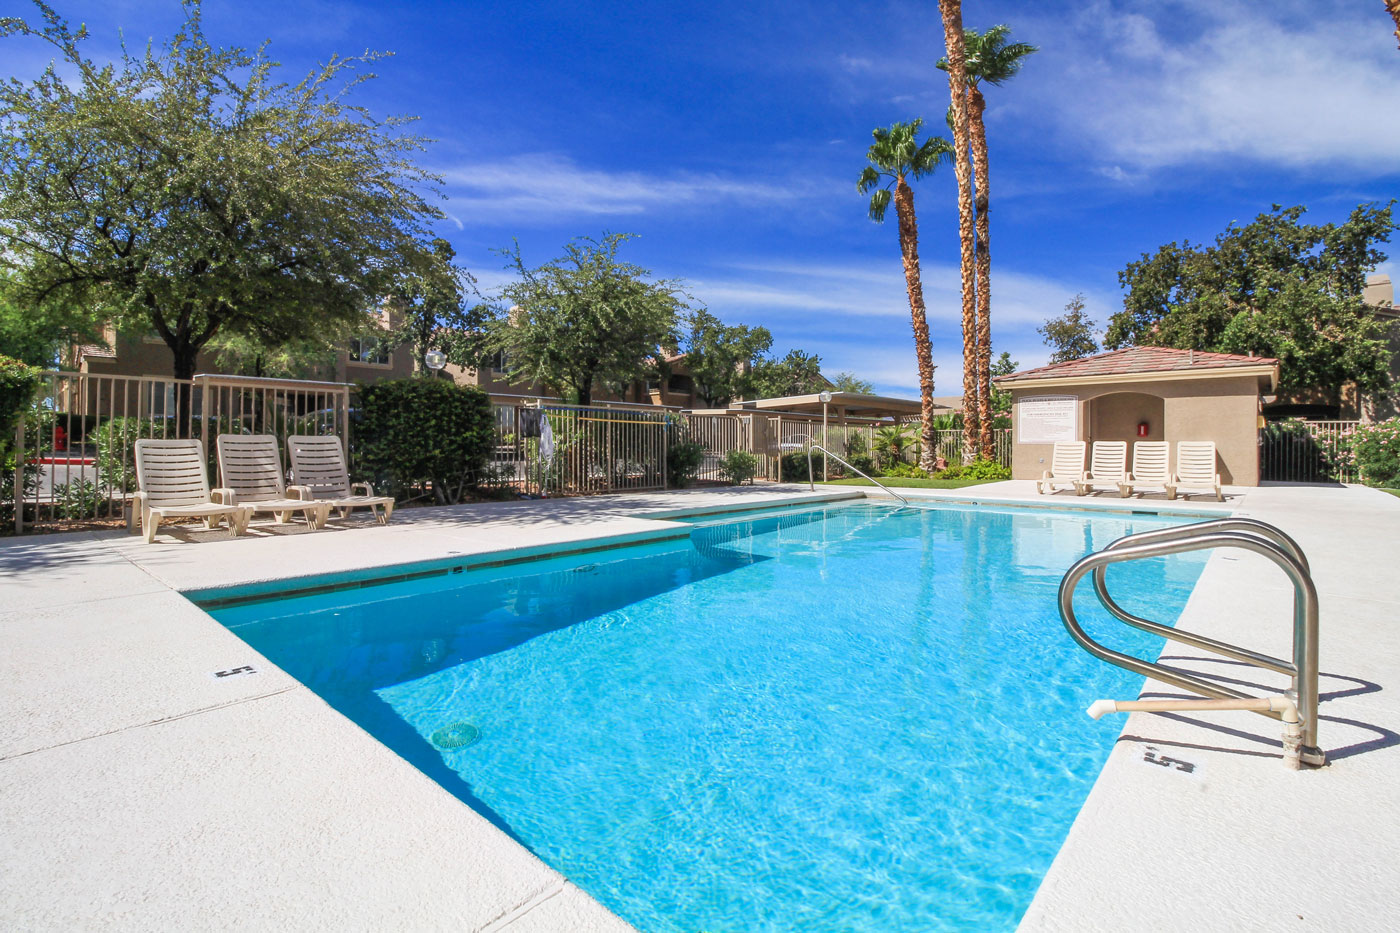 View of blue pool at San Tropez in Las Vegas.